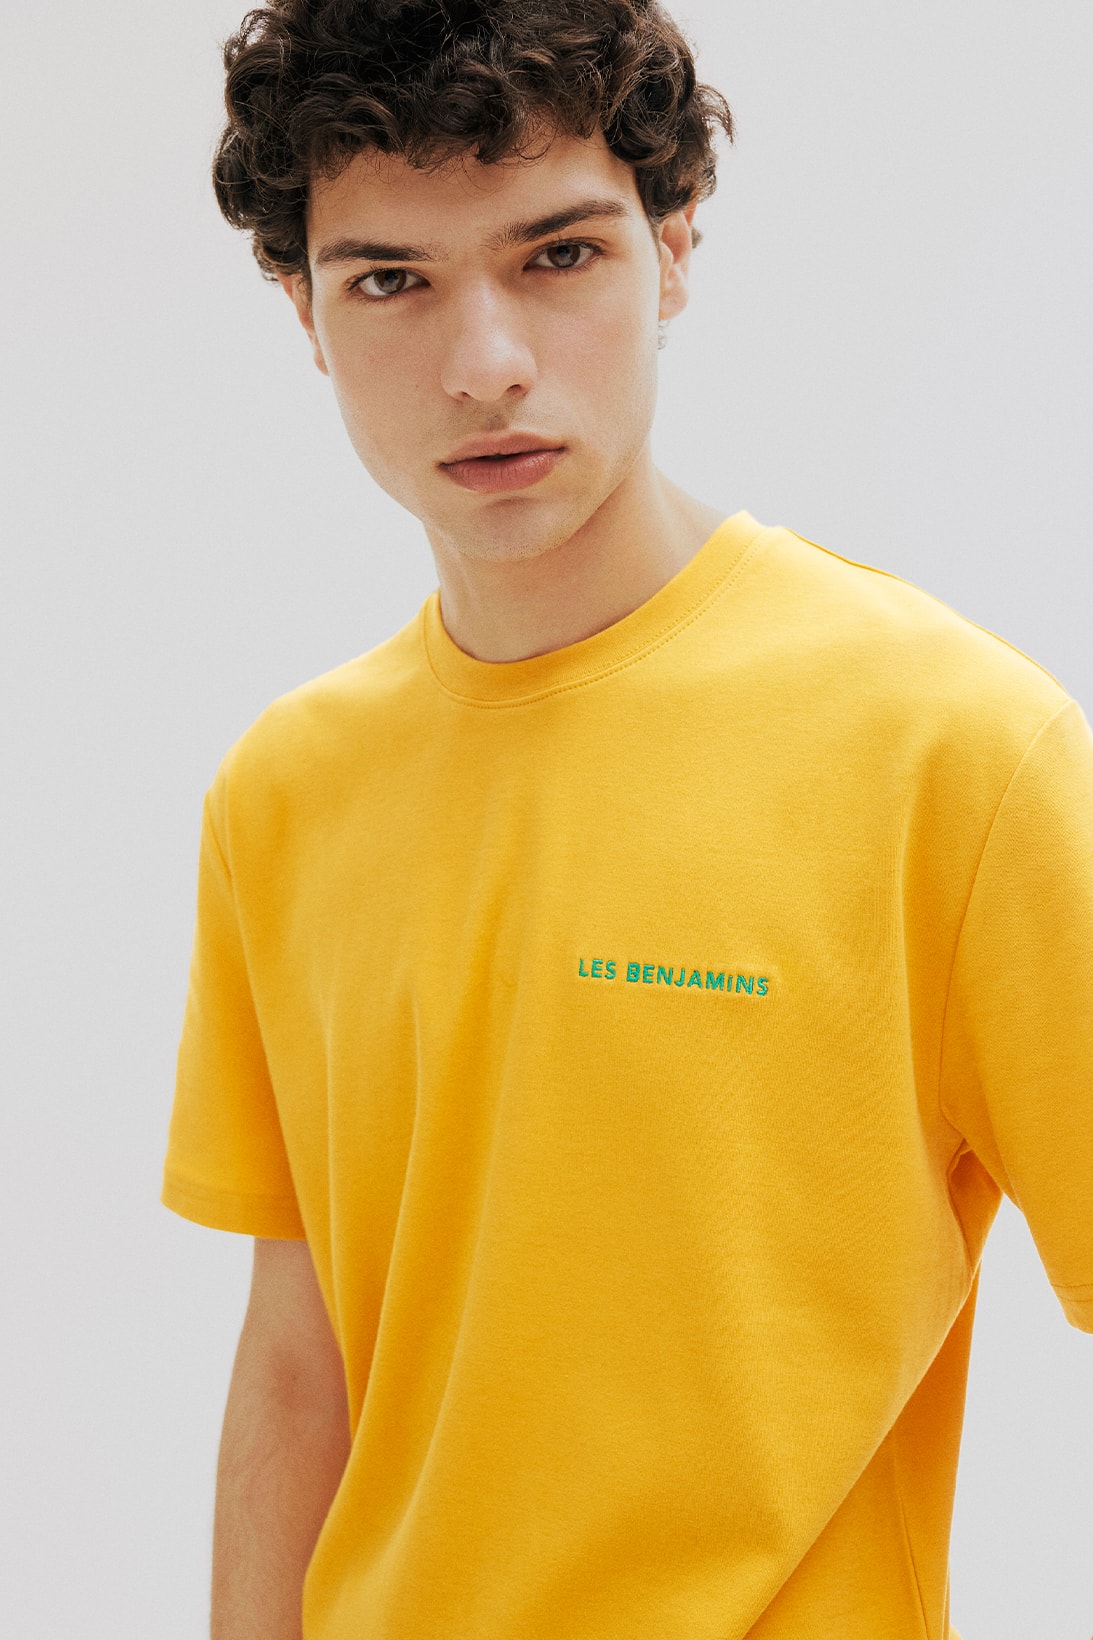 Les Benjamins "Essentials 4.0" Collection Streetwear T-Shirt Orange